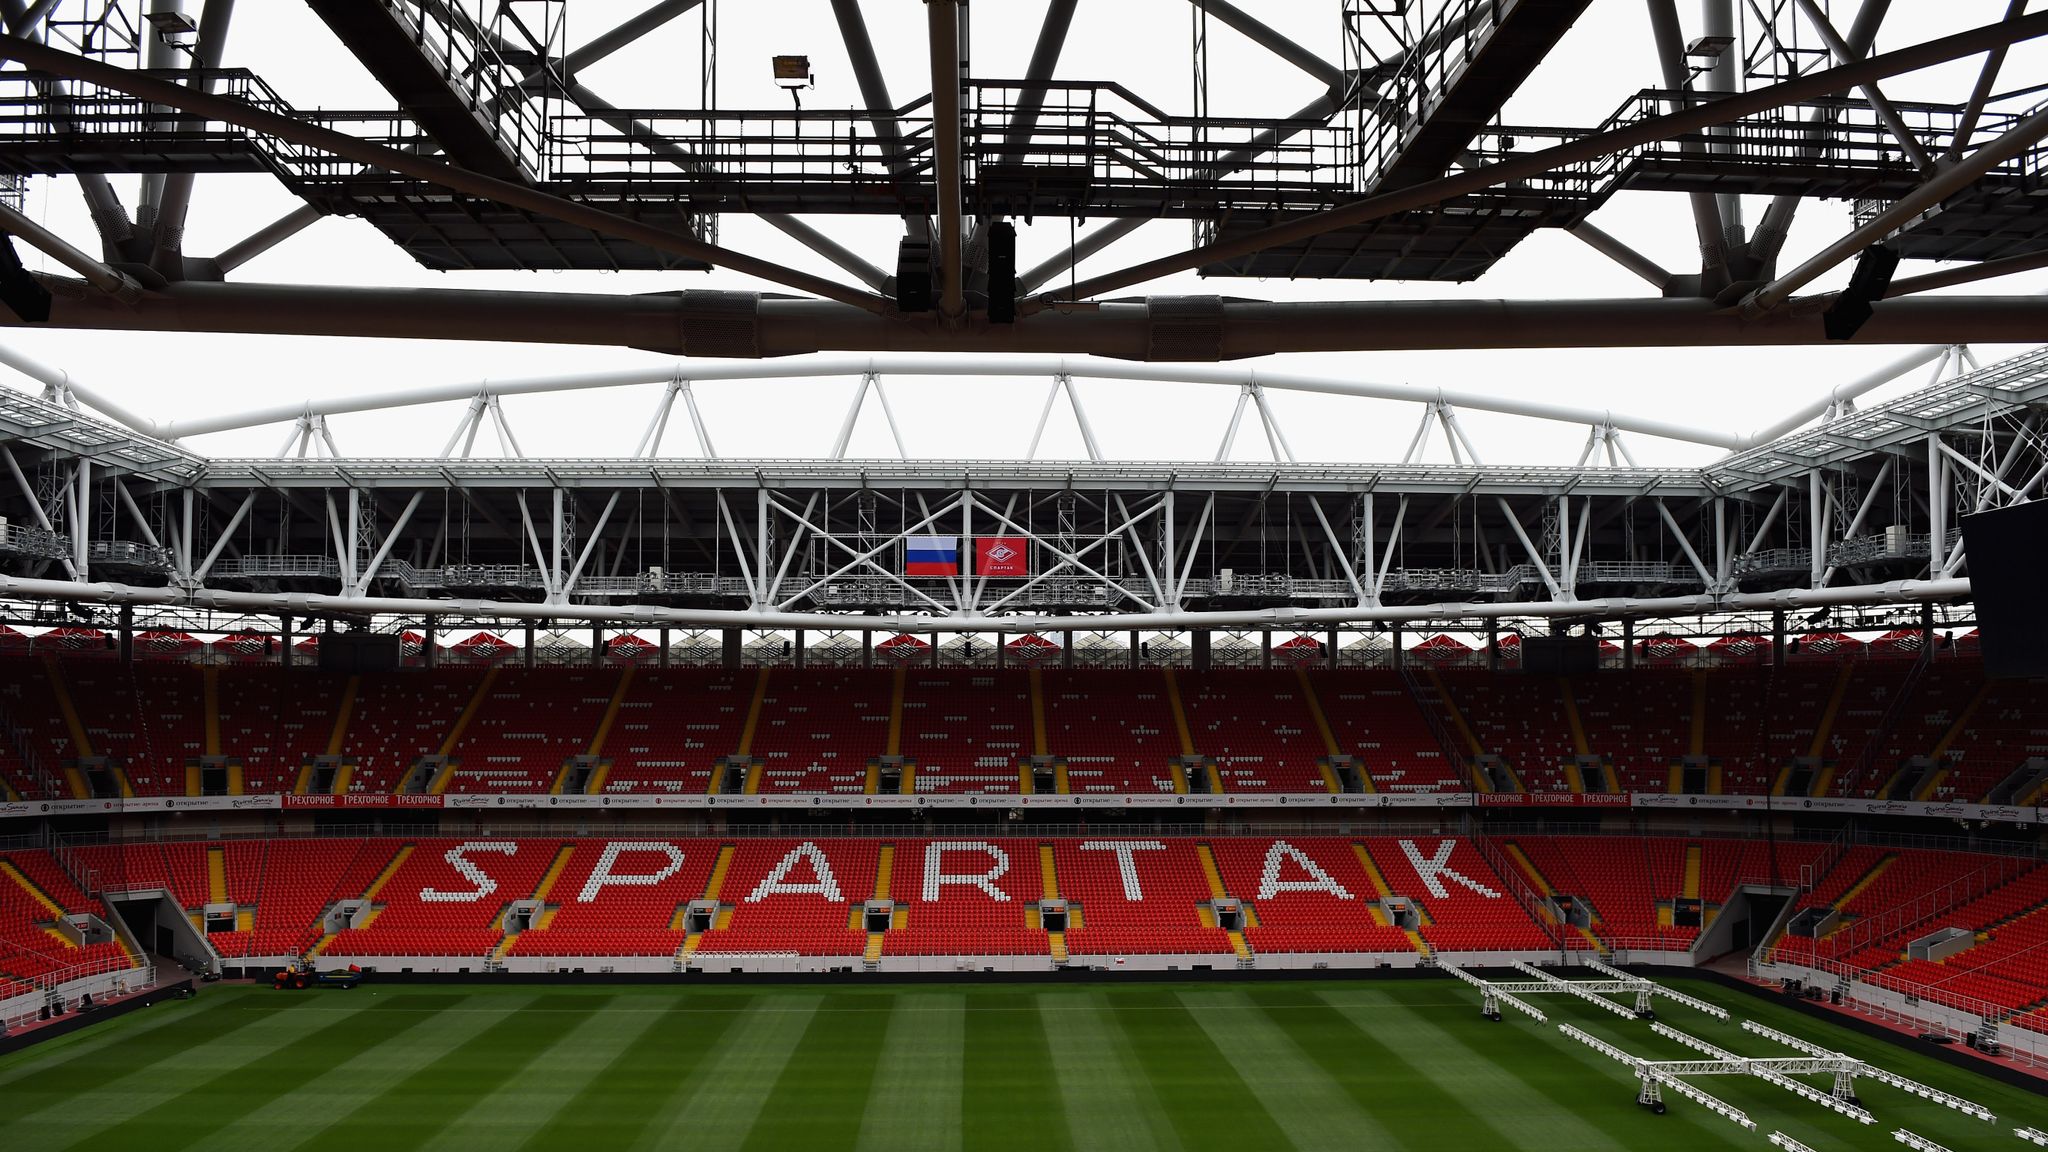 Spartak Stadium - Picture of Spartak Stadium (Otkrytiye Arena